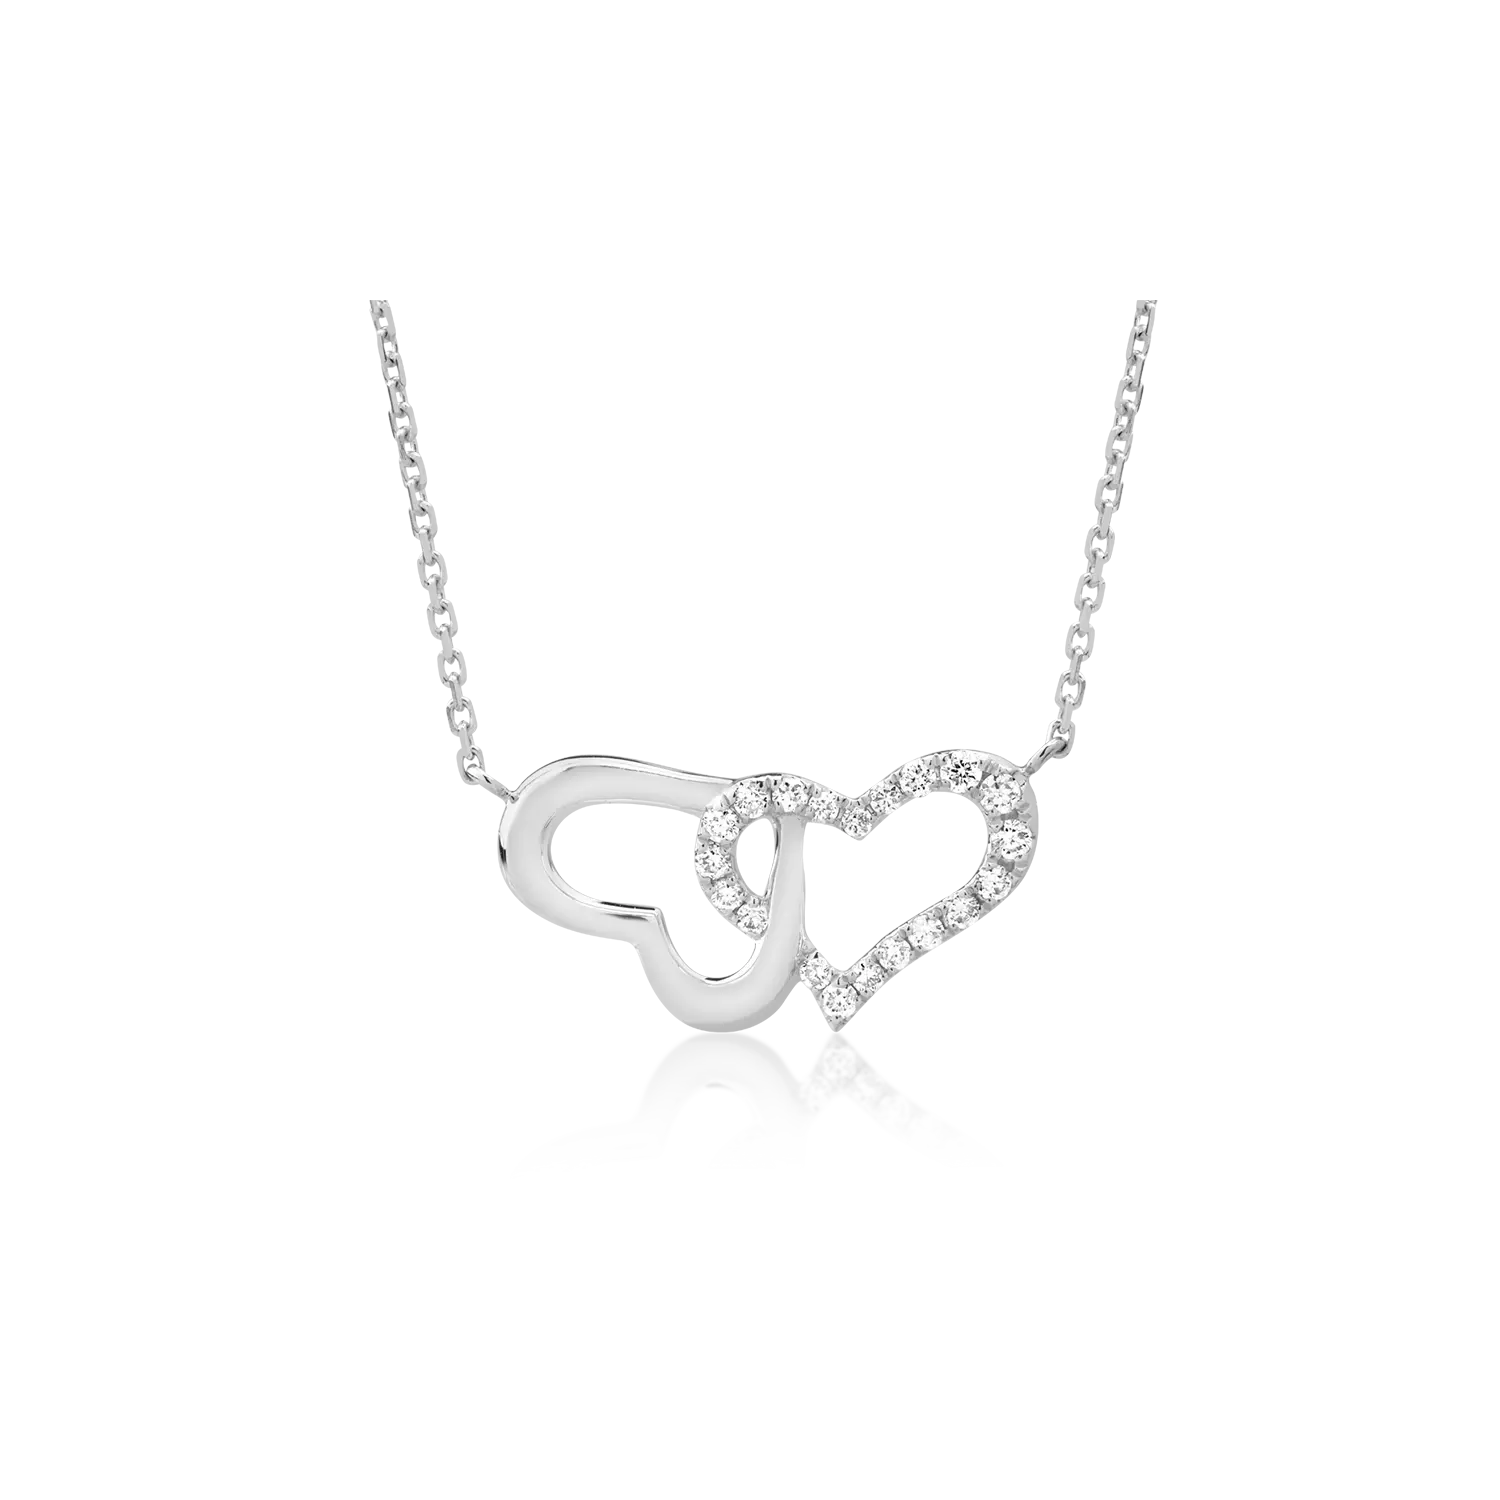 18K white gold hearts pendant chain with 0.053ct diamonds